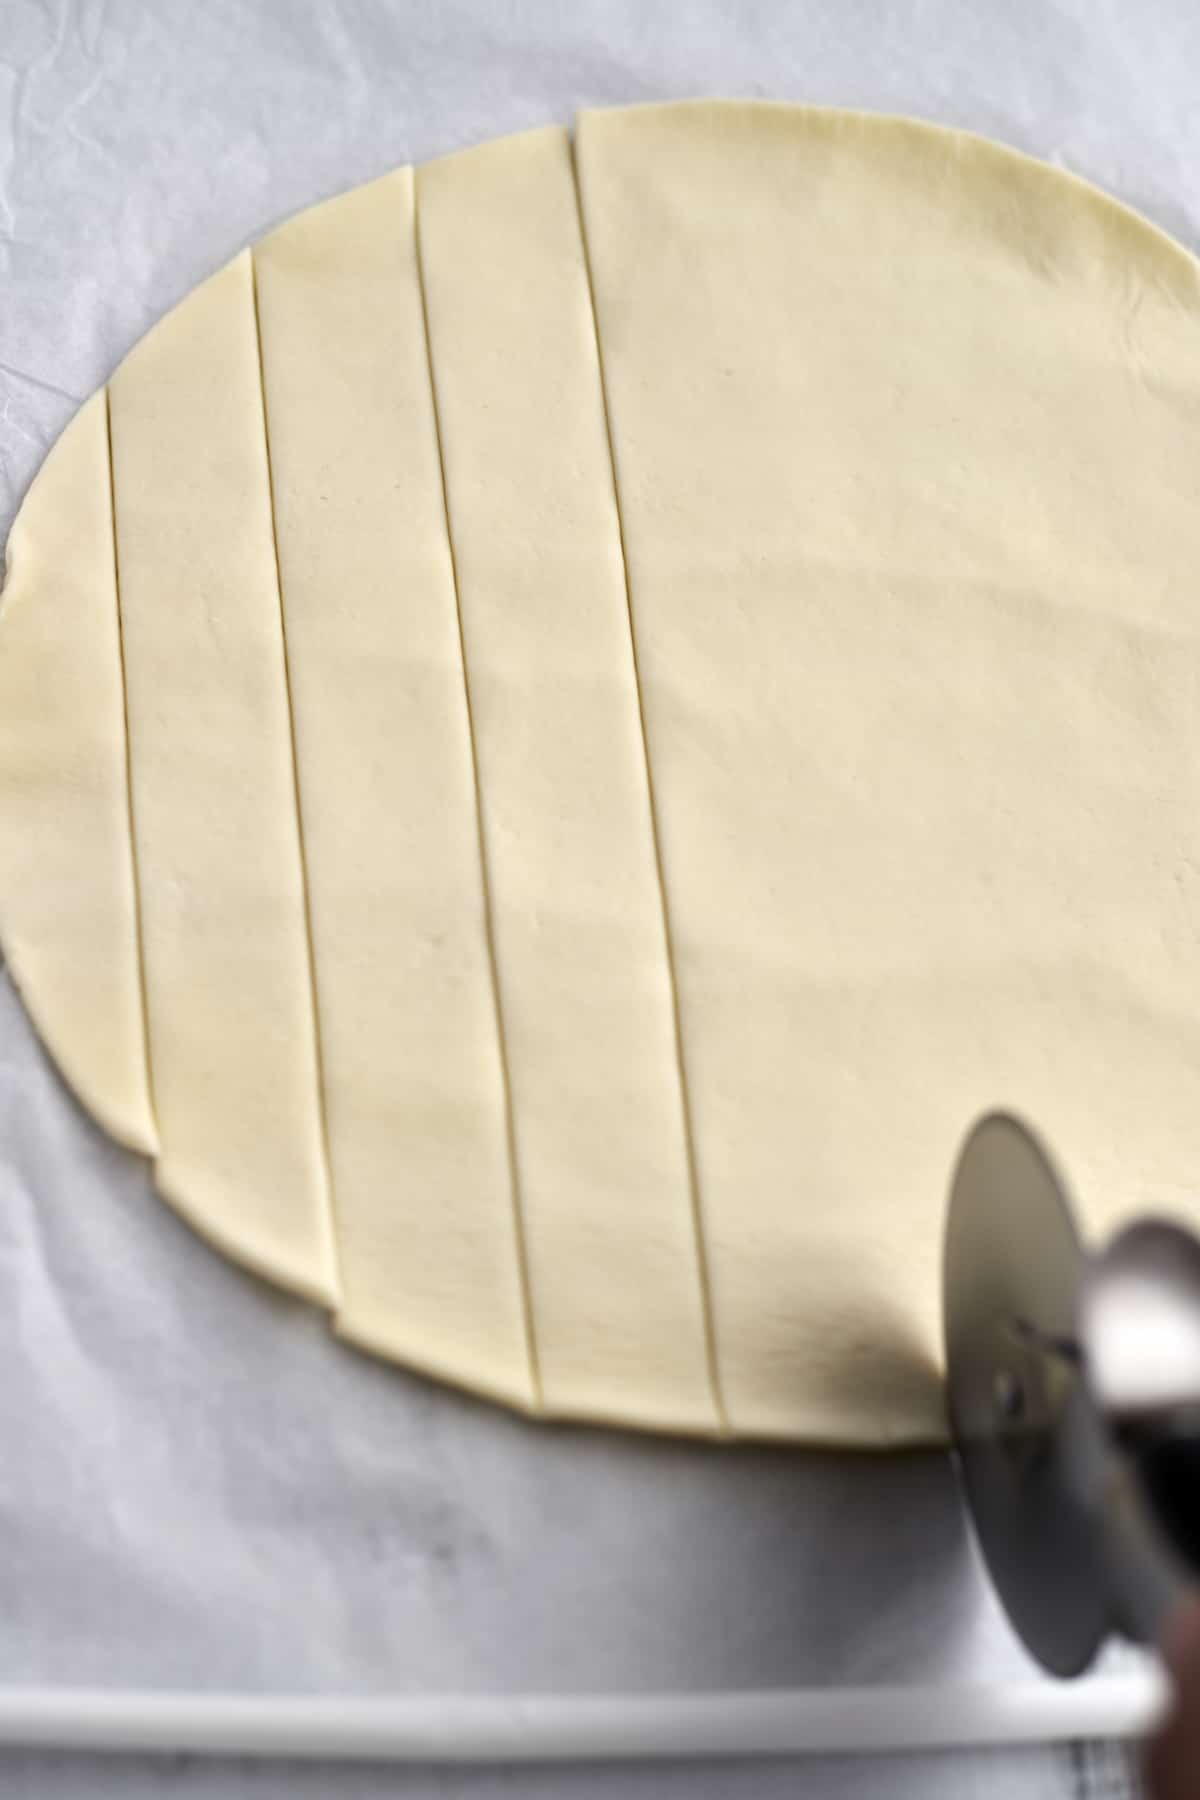 cobbler dough being sliced into strips